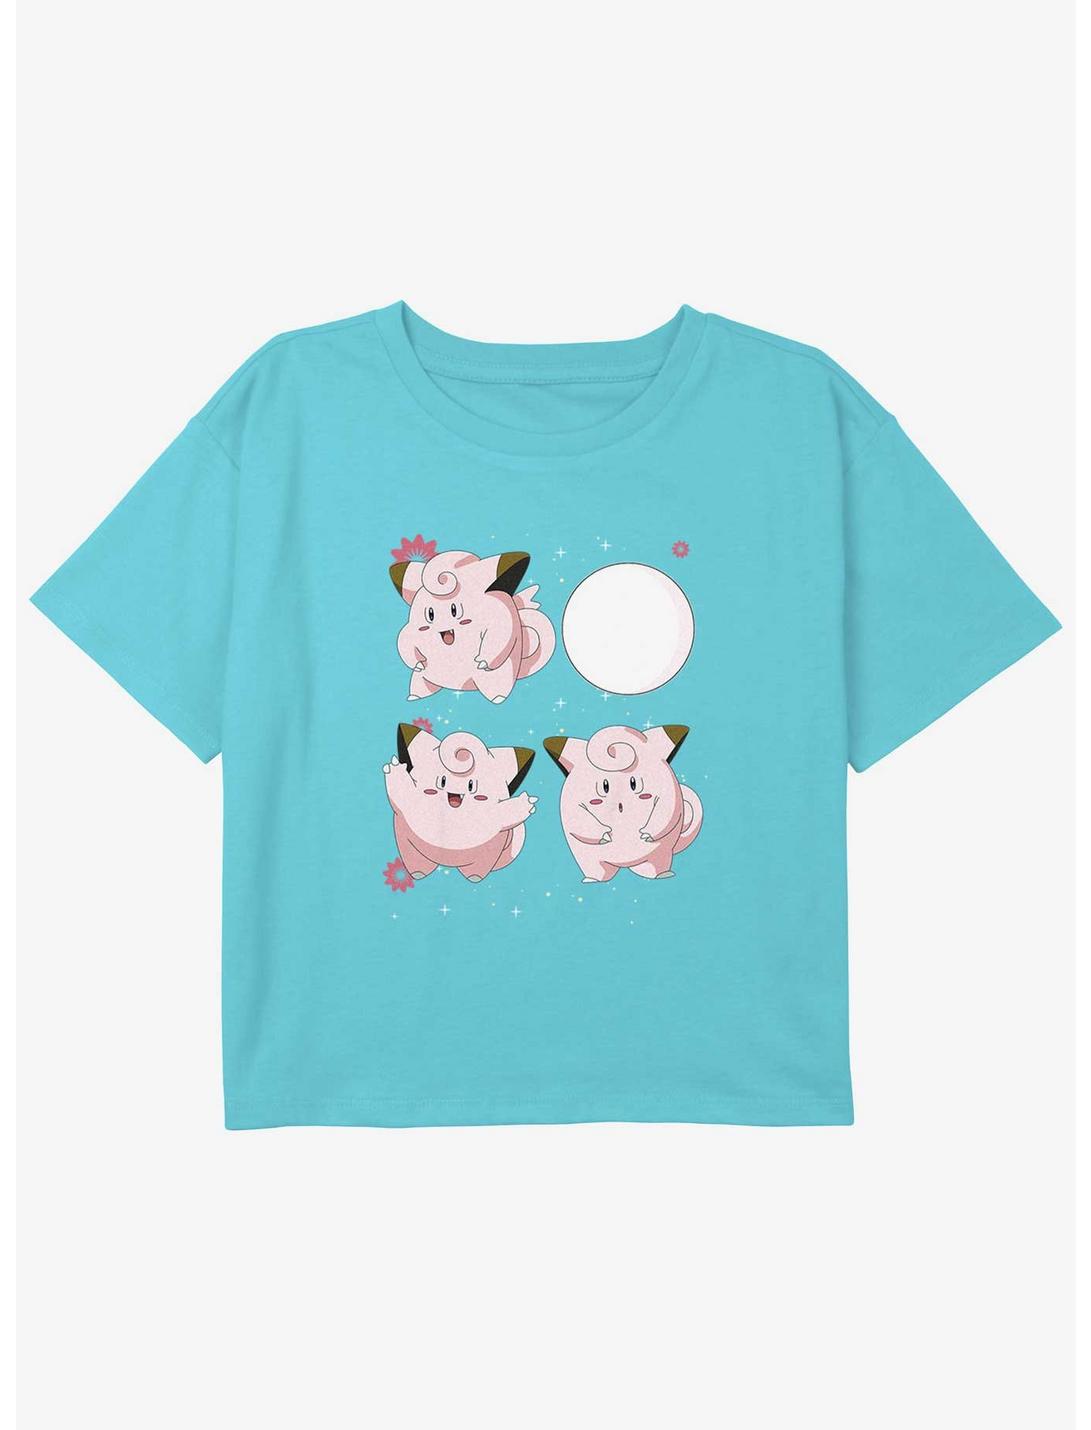 Pokemon Clefairy Girls Youth Crop T-Shirt, BLUE, hi-res